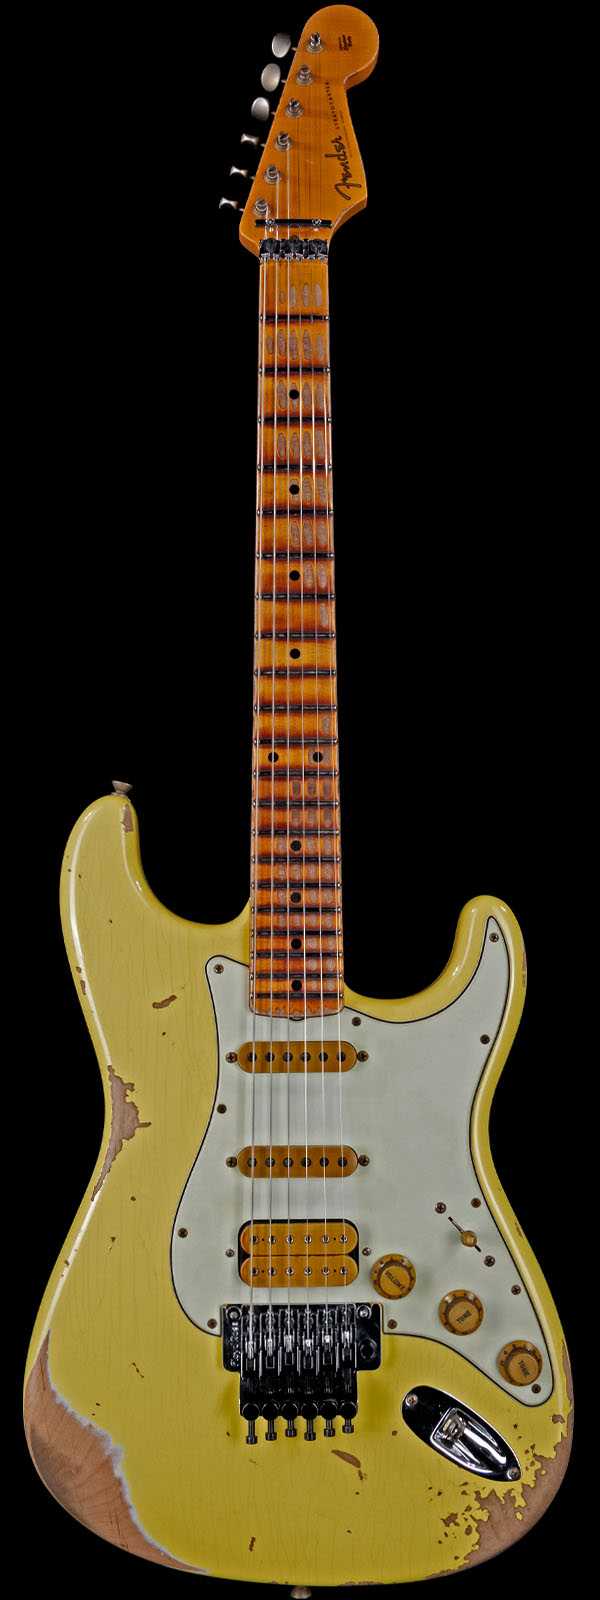 Fender Custom Shop Alley Cat Stratocaster Heavy Relic HSS Floyd Rose Maple Board Graffiti Yellow